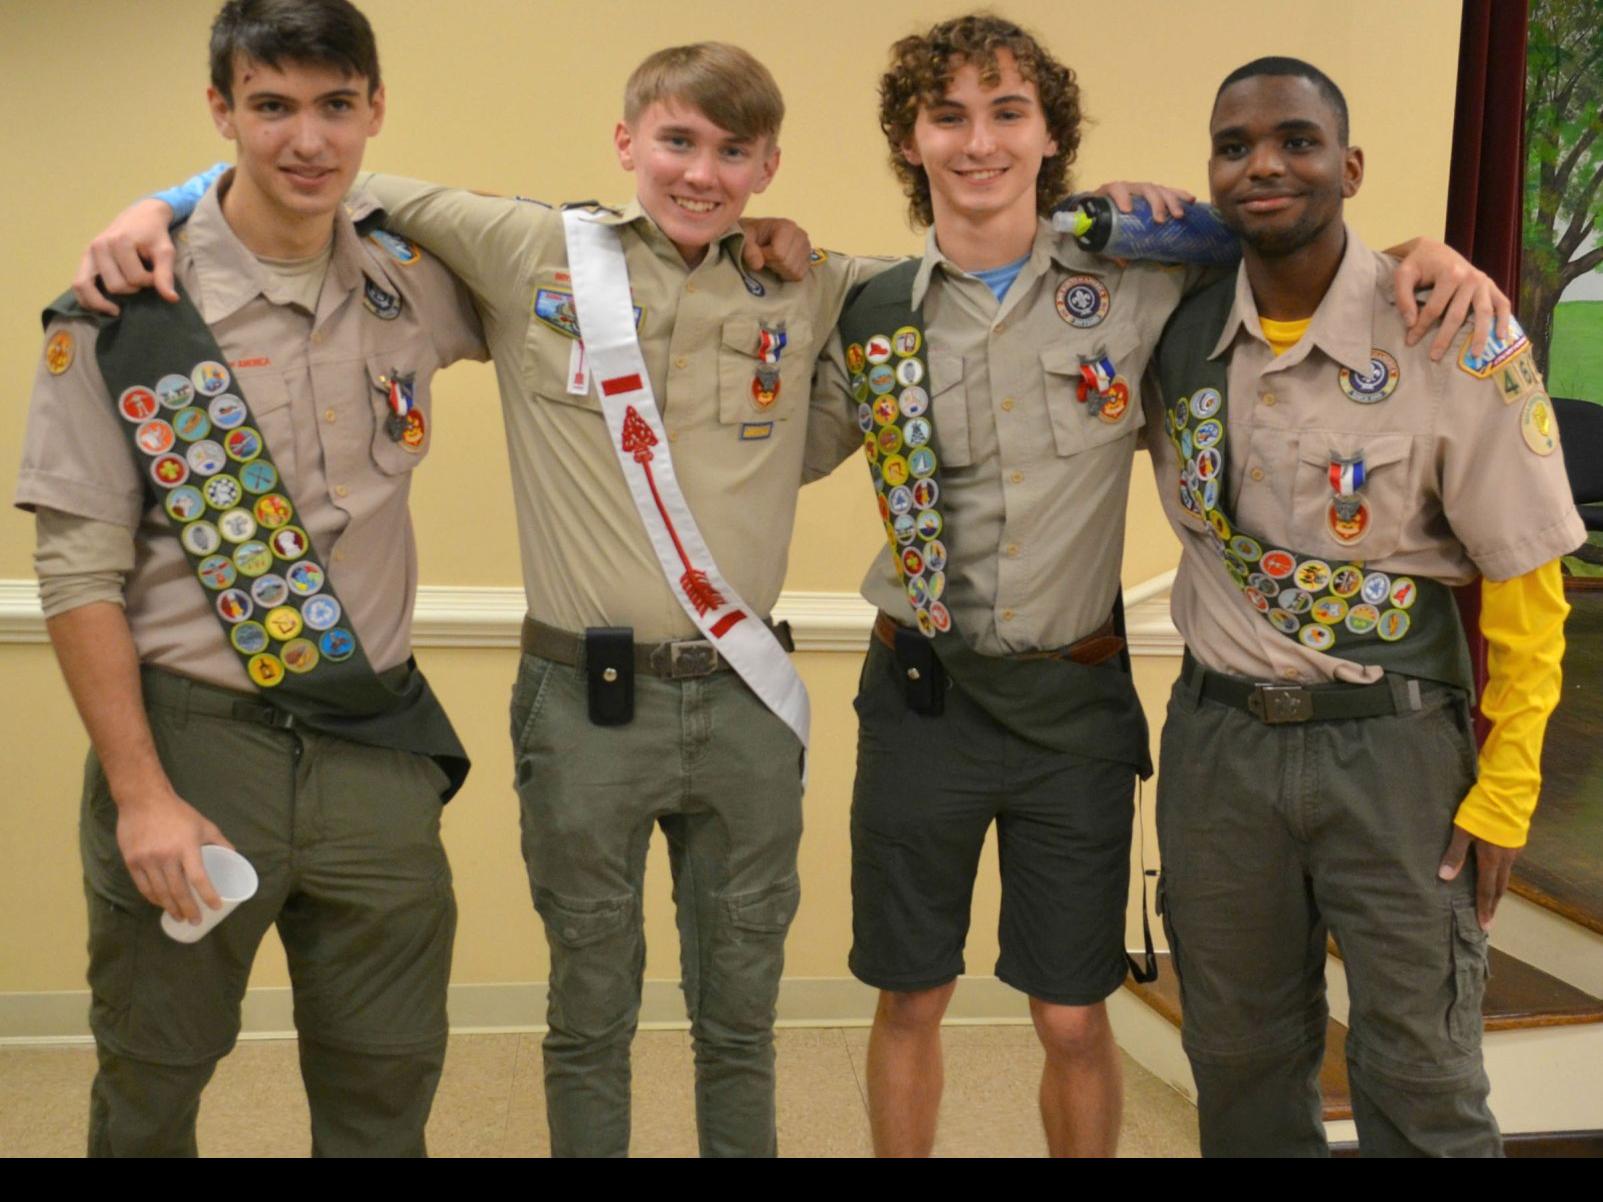 Brunswick Boy Scout troop recognized five new Eagle Scouts